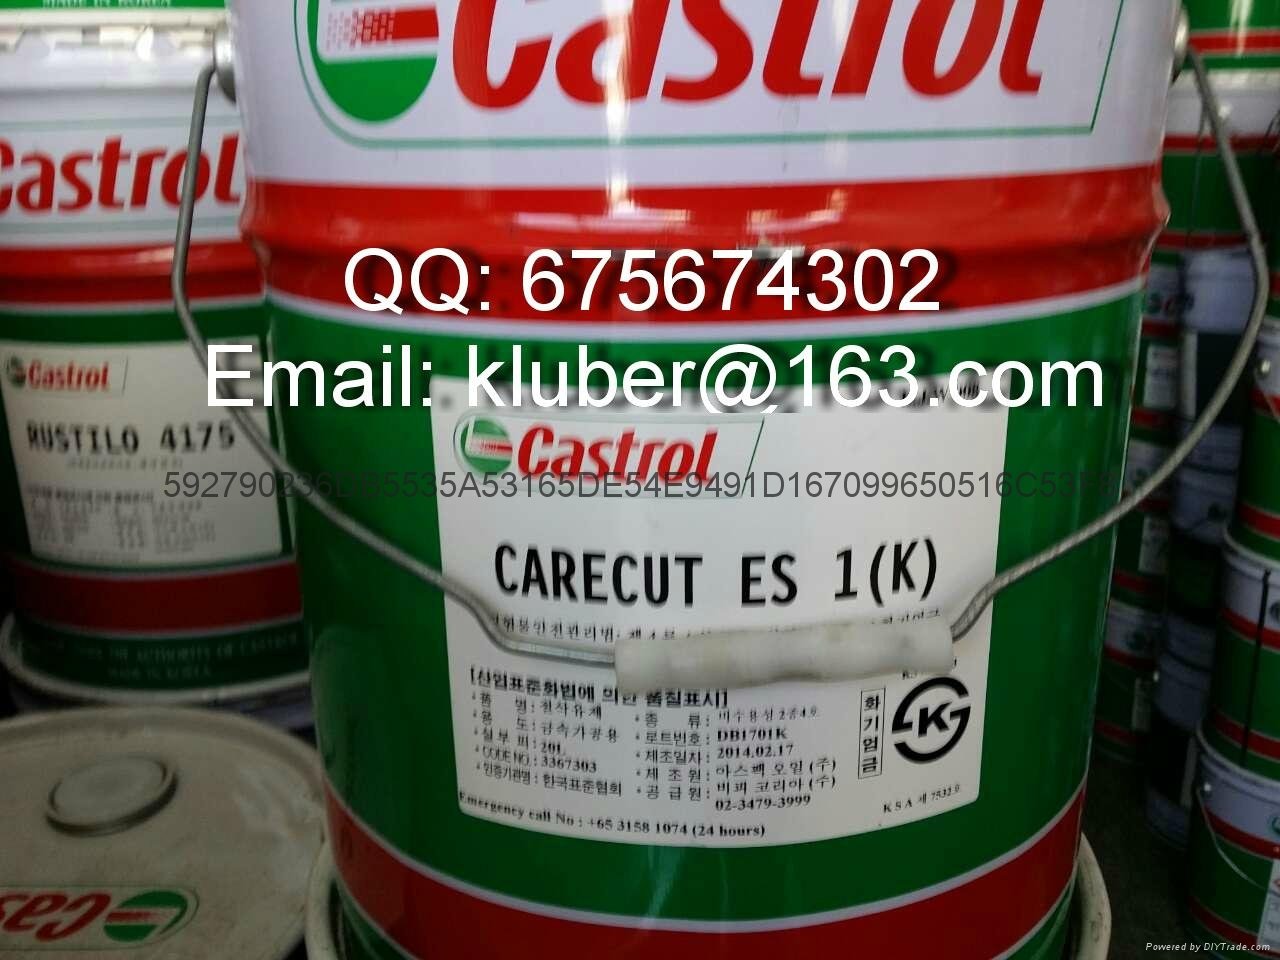 Castrol CareCut ES 1 neat cutting oil